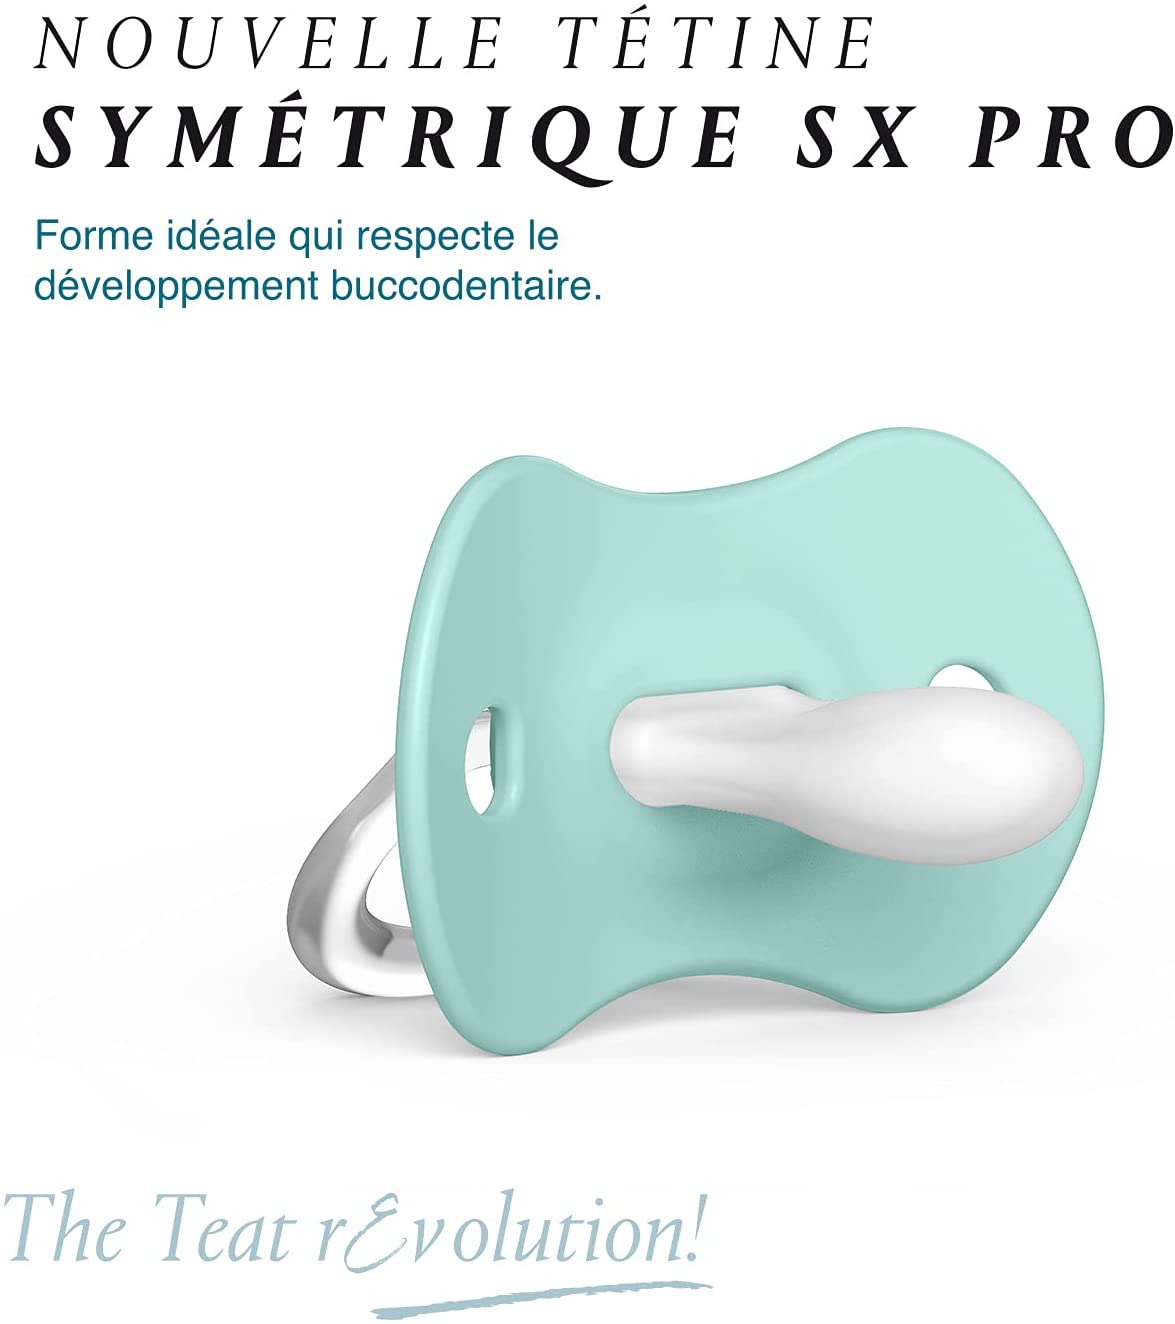 Sucette Zero Zero symetrique silicone, Suavinex de Suavinex